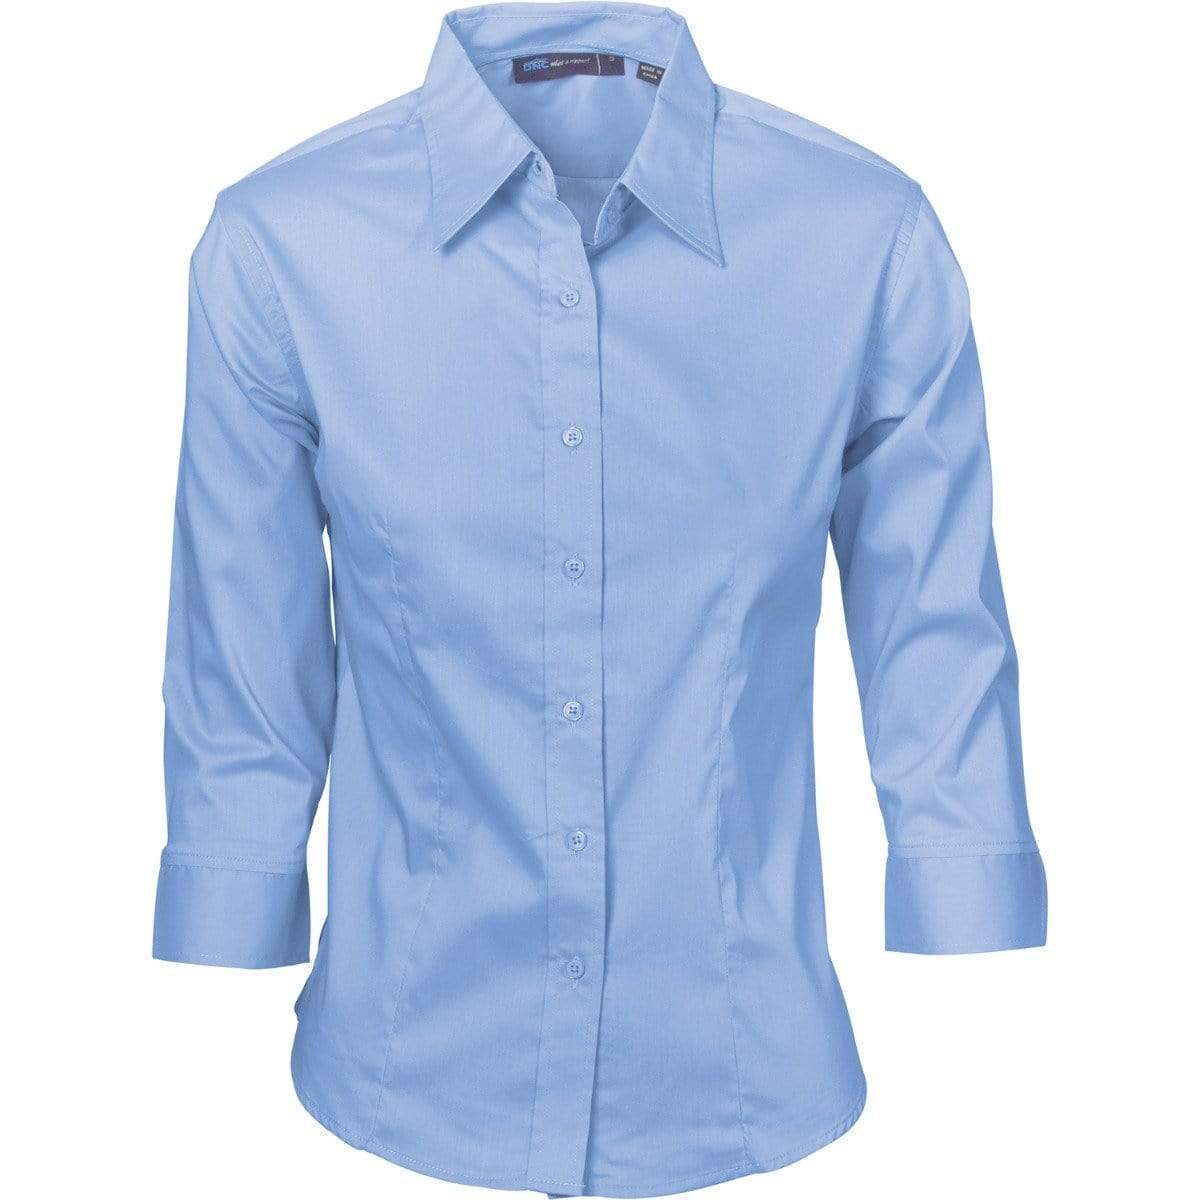 Dnc Workwear Ladies Premier Stretch Poplin 3/4 Sleeve Business Shirt - 4232 Corporate Wear DNC Workwear Blue 6 